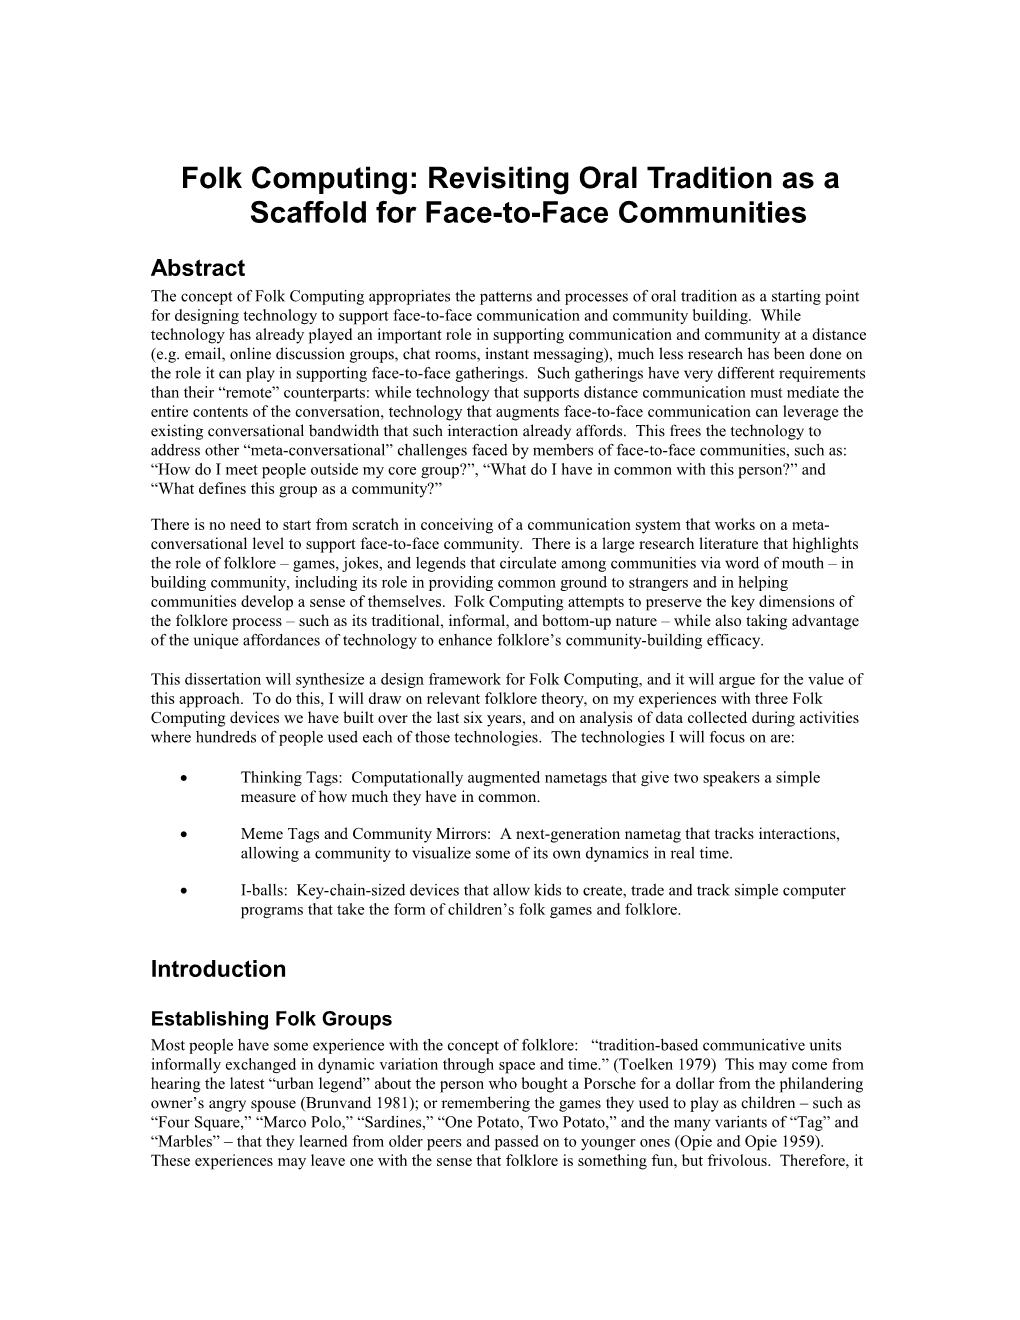 Proposed Solution: Folk Computing